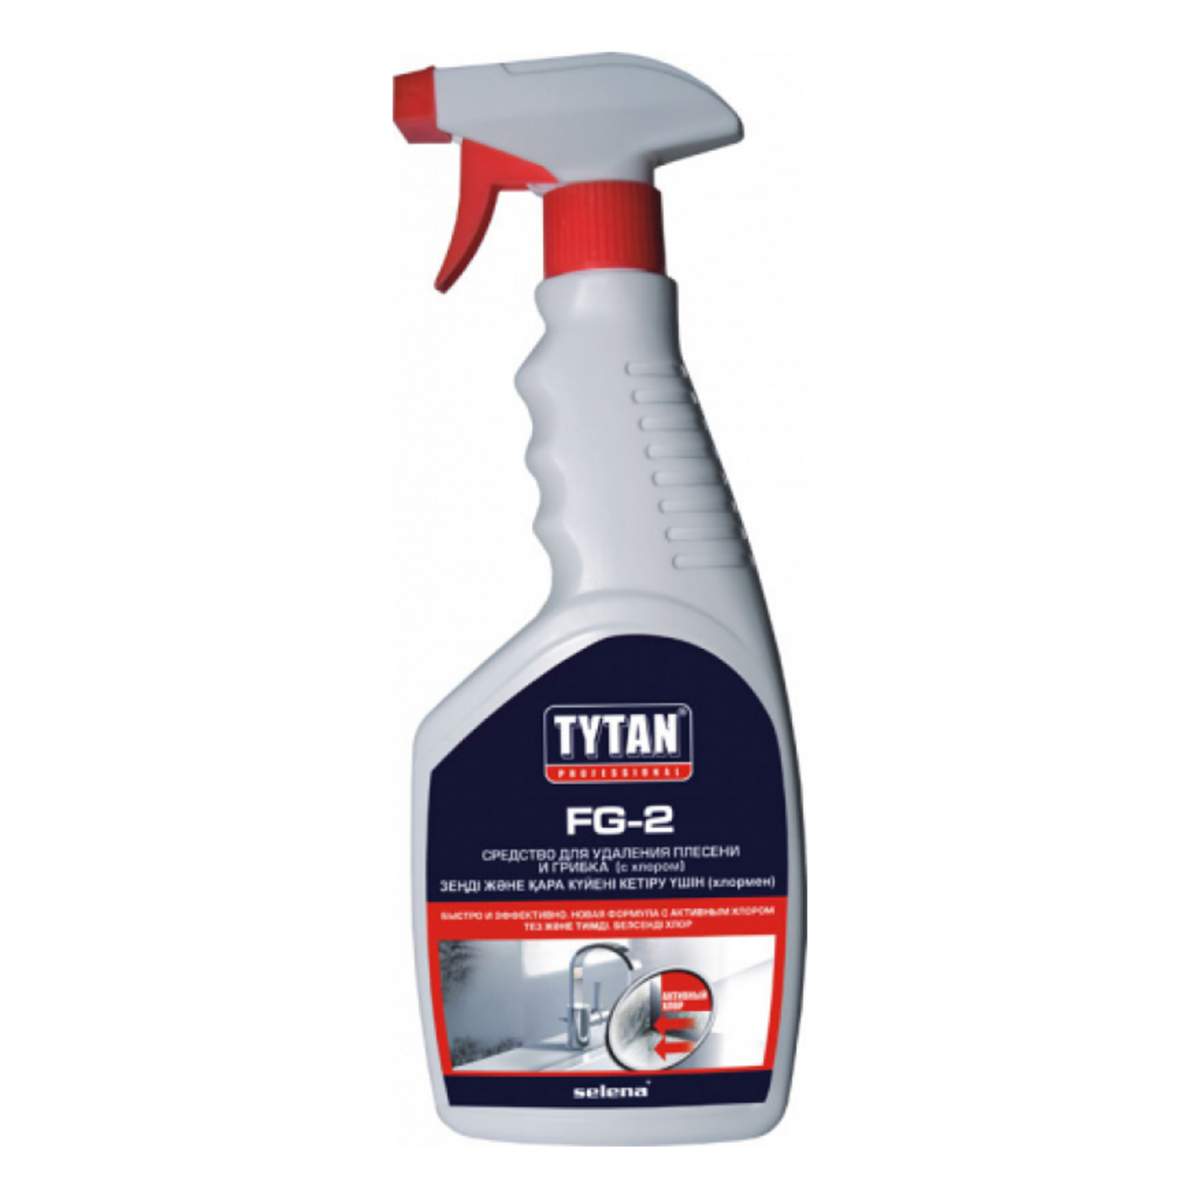 Антисептик против плесени и грибка с хлором Tytan Professional FG-2 16120, 500 мл филлер для век против 20г